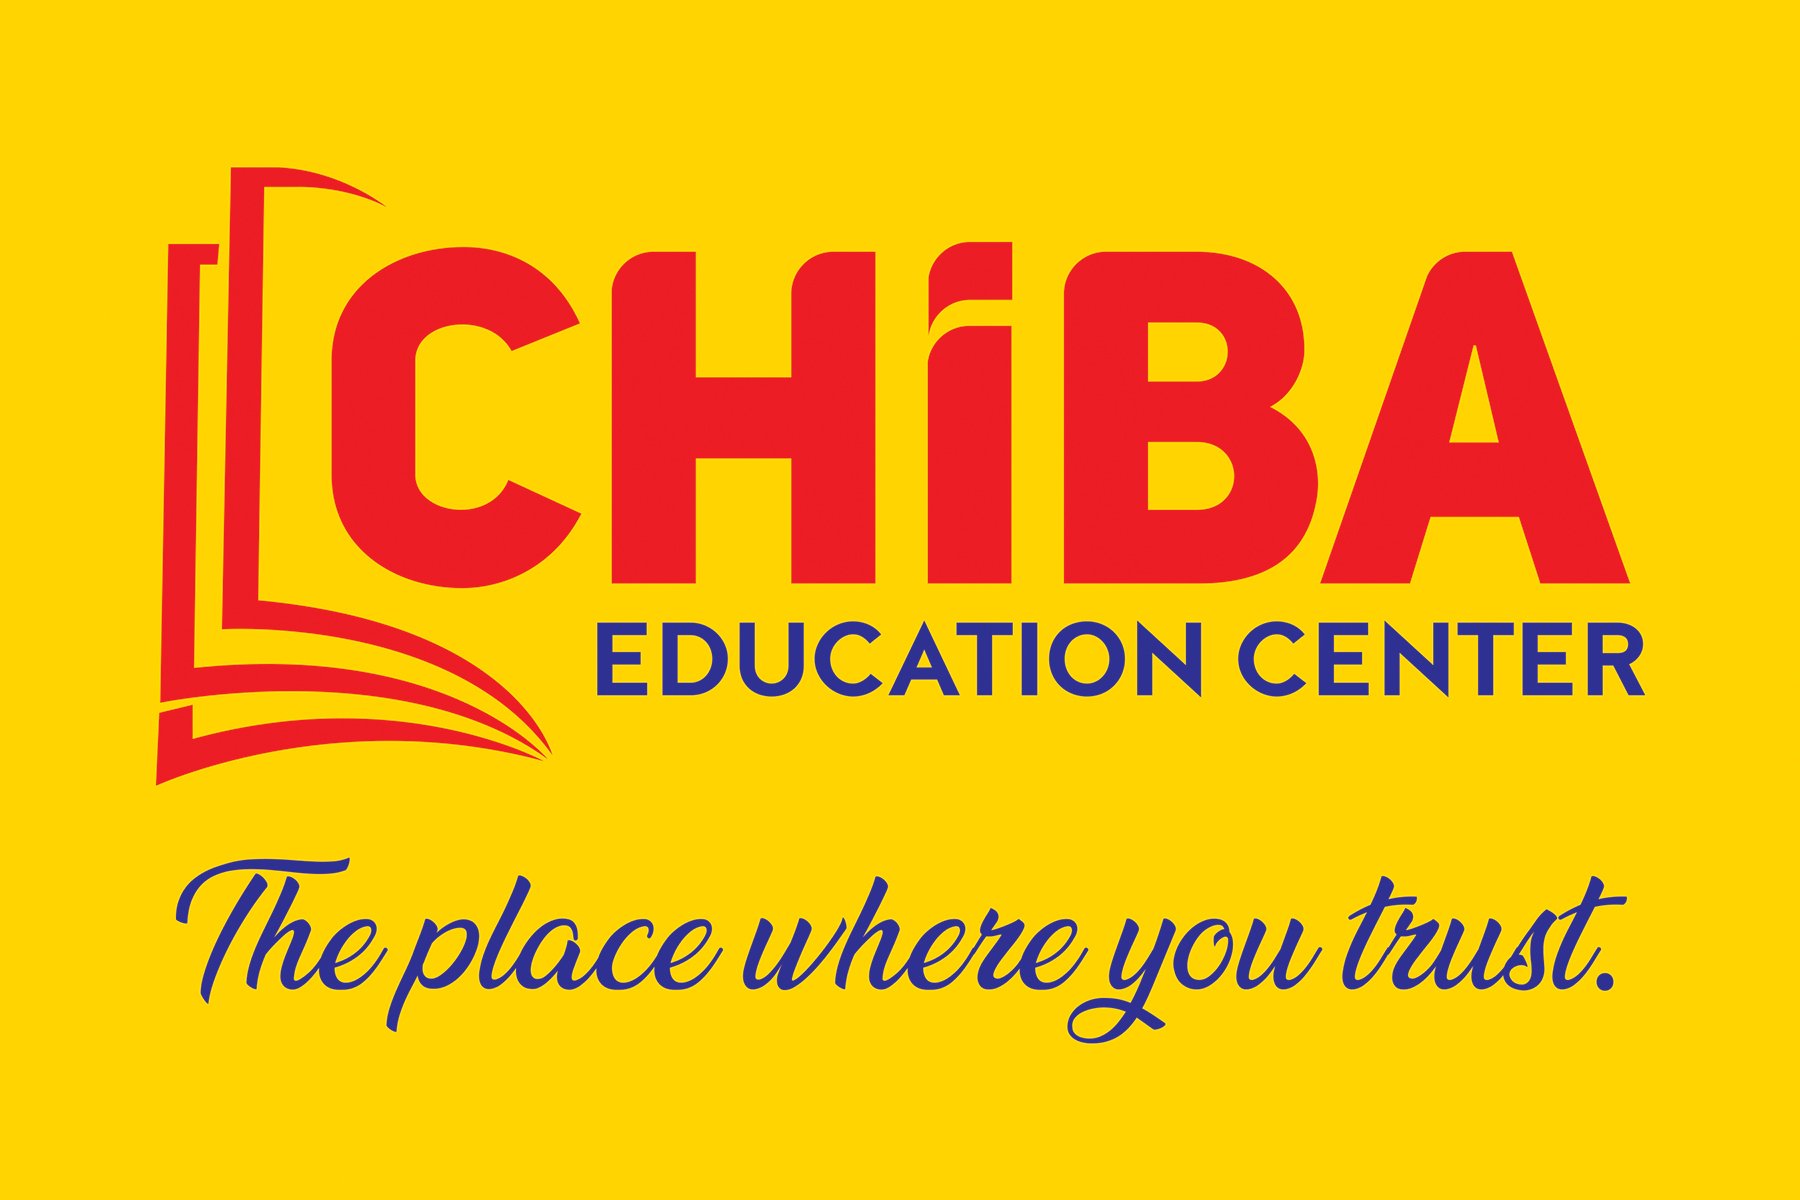 Chiba Education Center